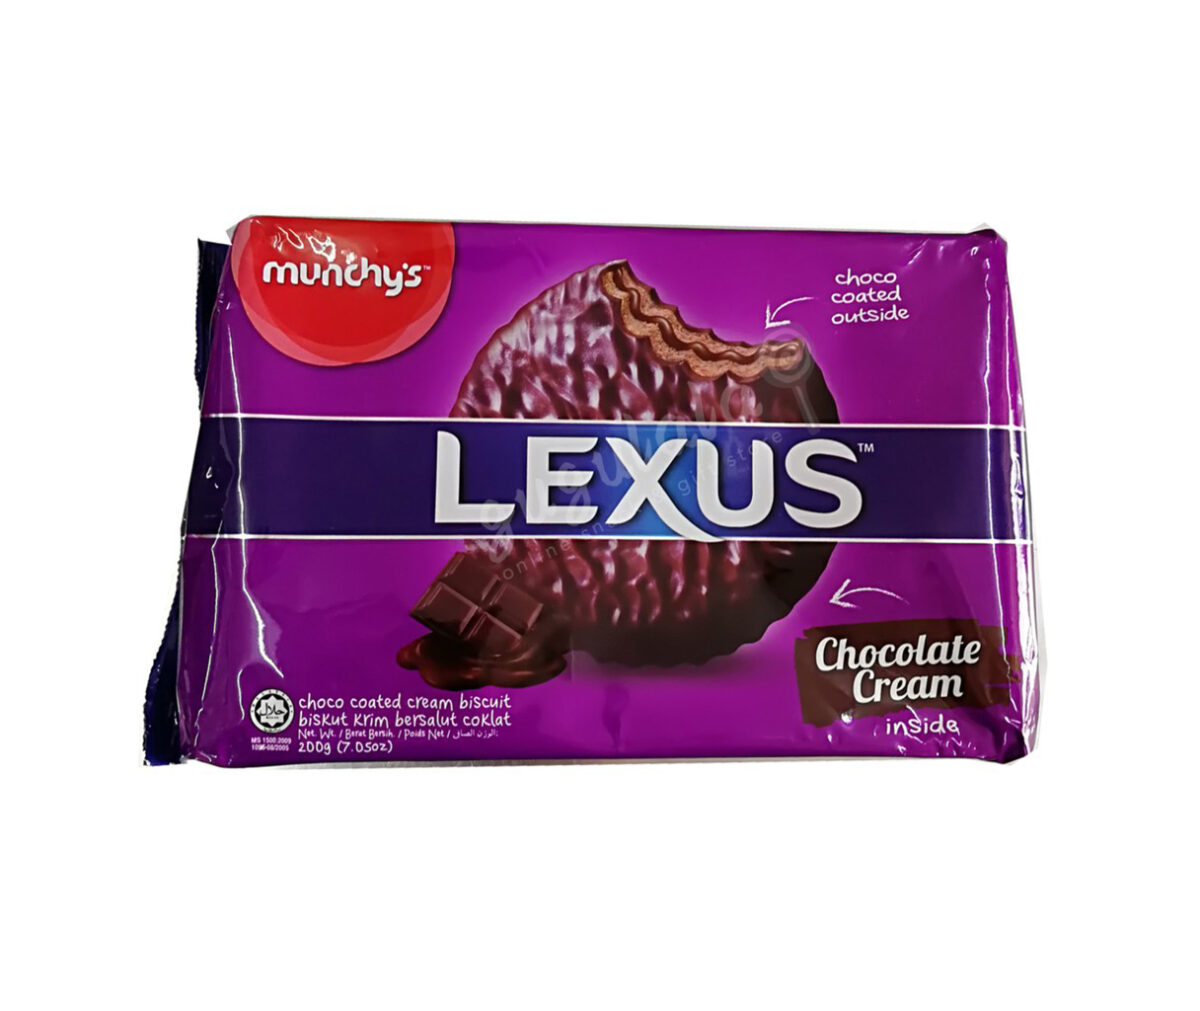 Munchy Lexus Biscuit Chocolate Cream 190g